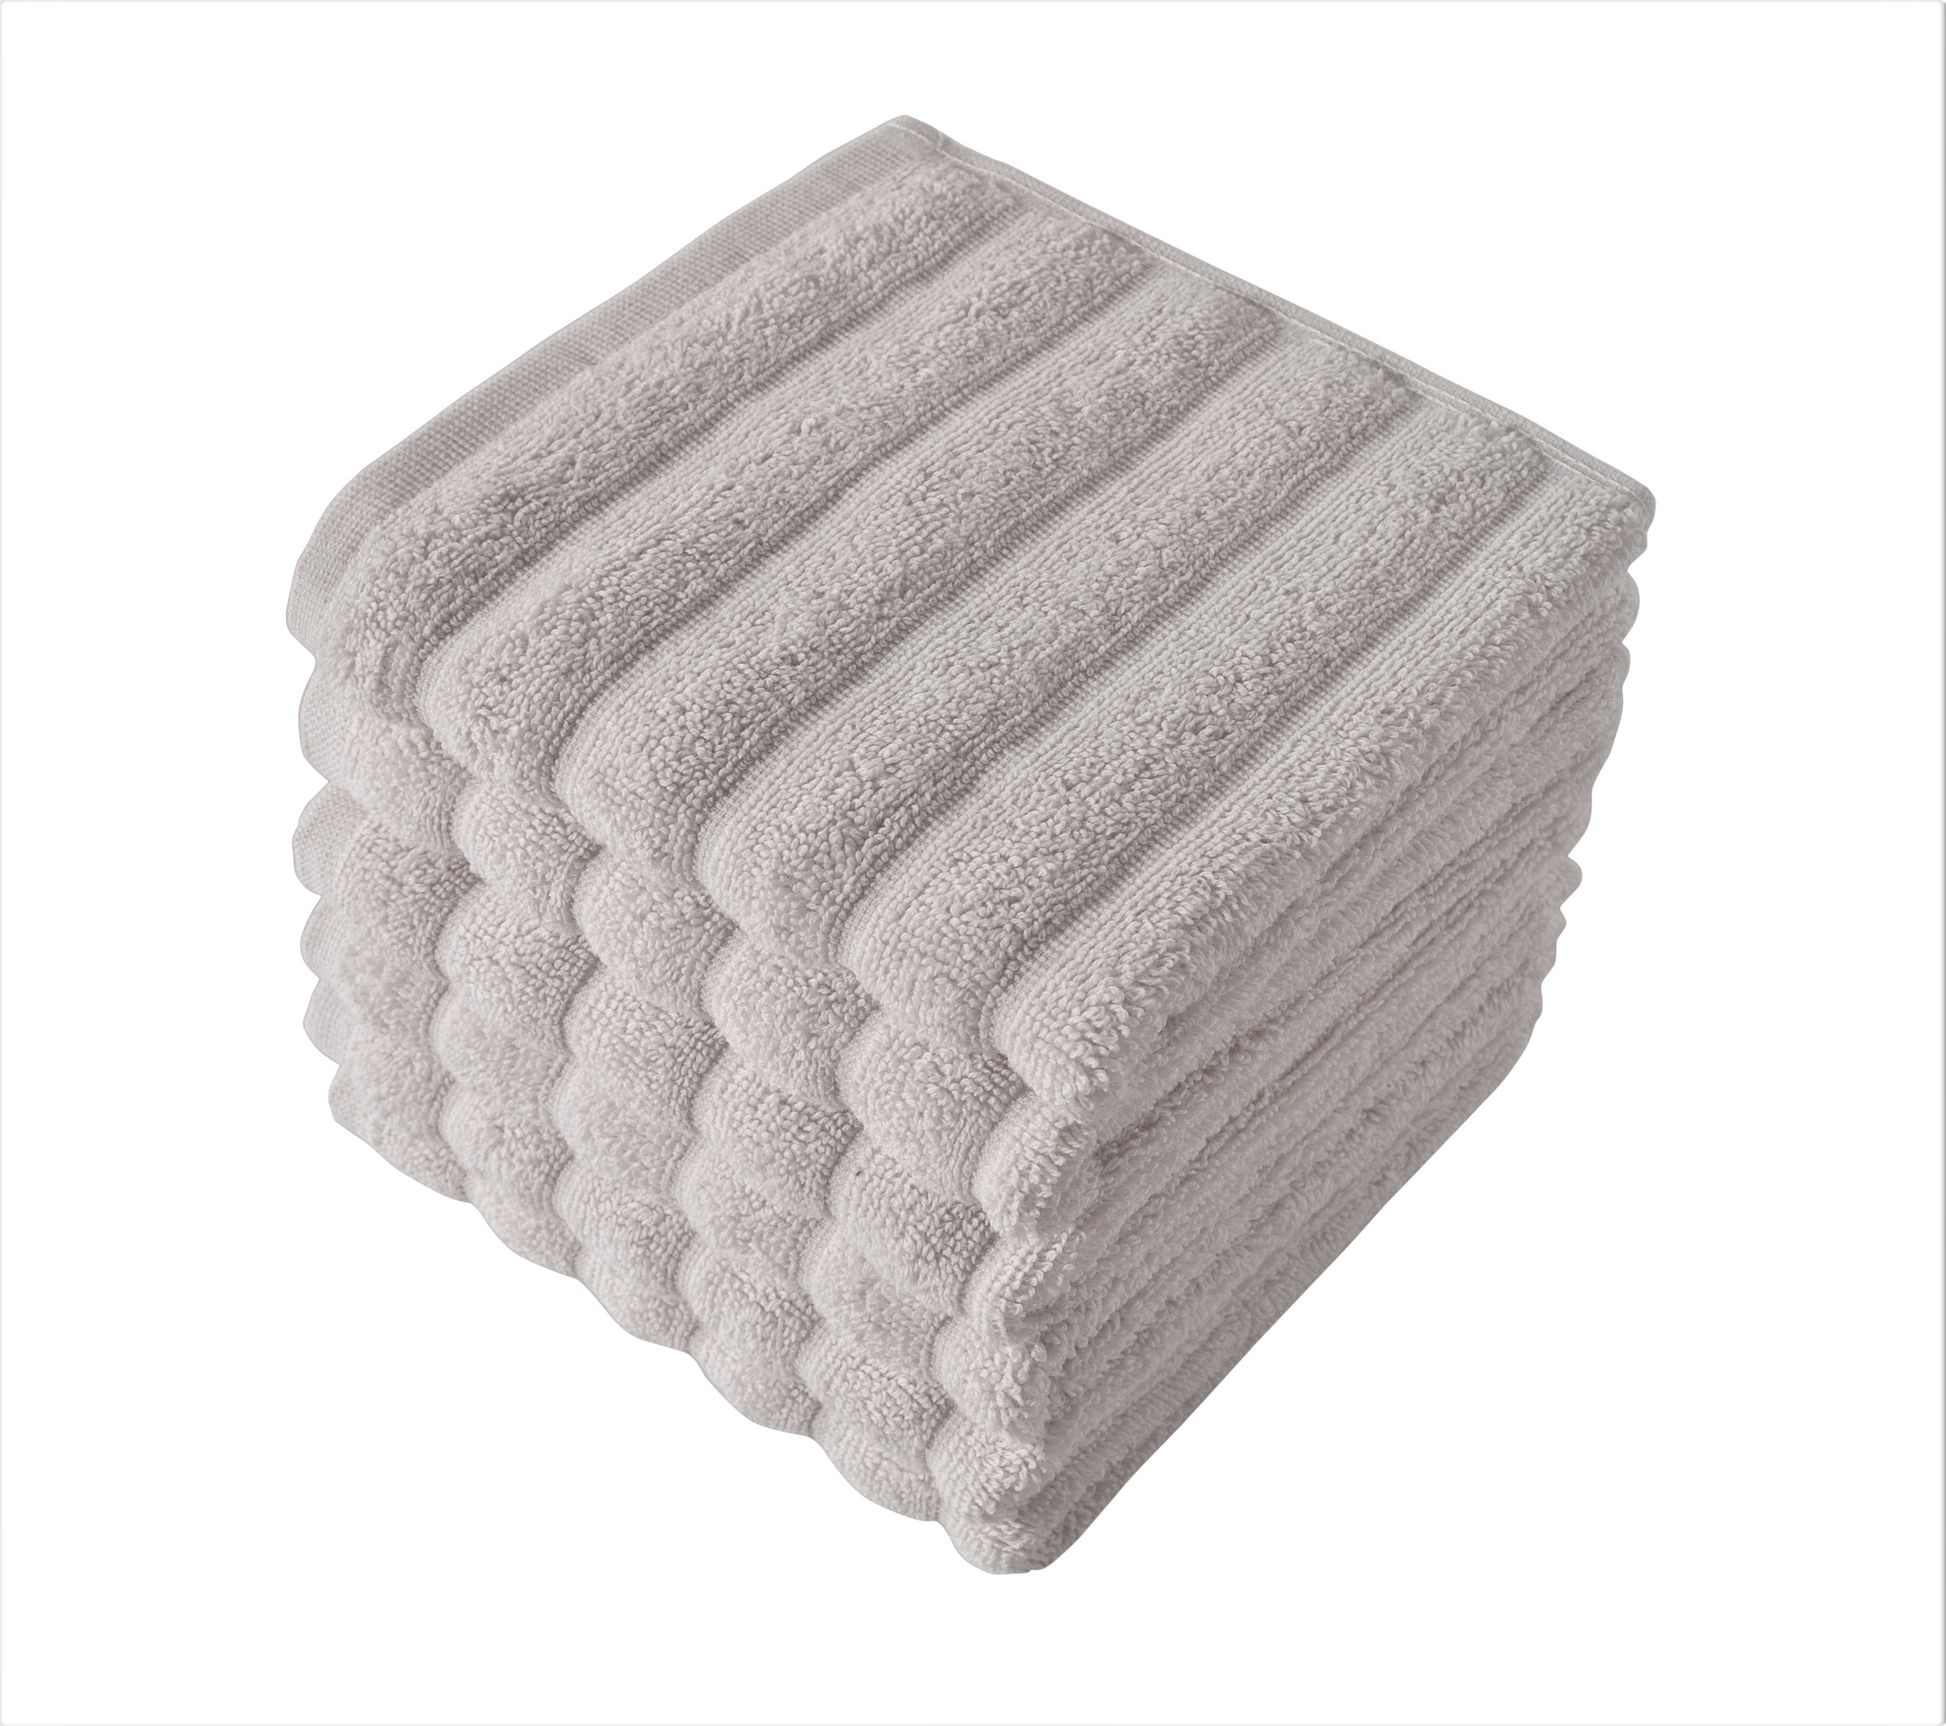 Brampton Turkish Cotton Large Hand Towels - 4 Pieces - 20x32